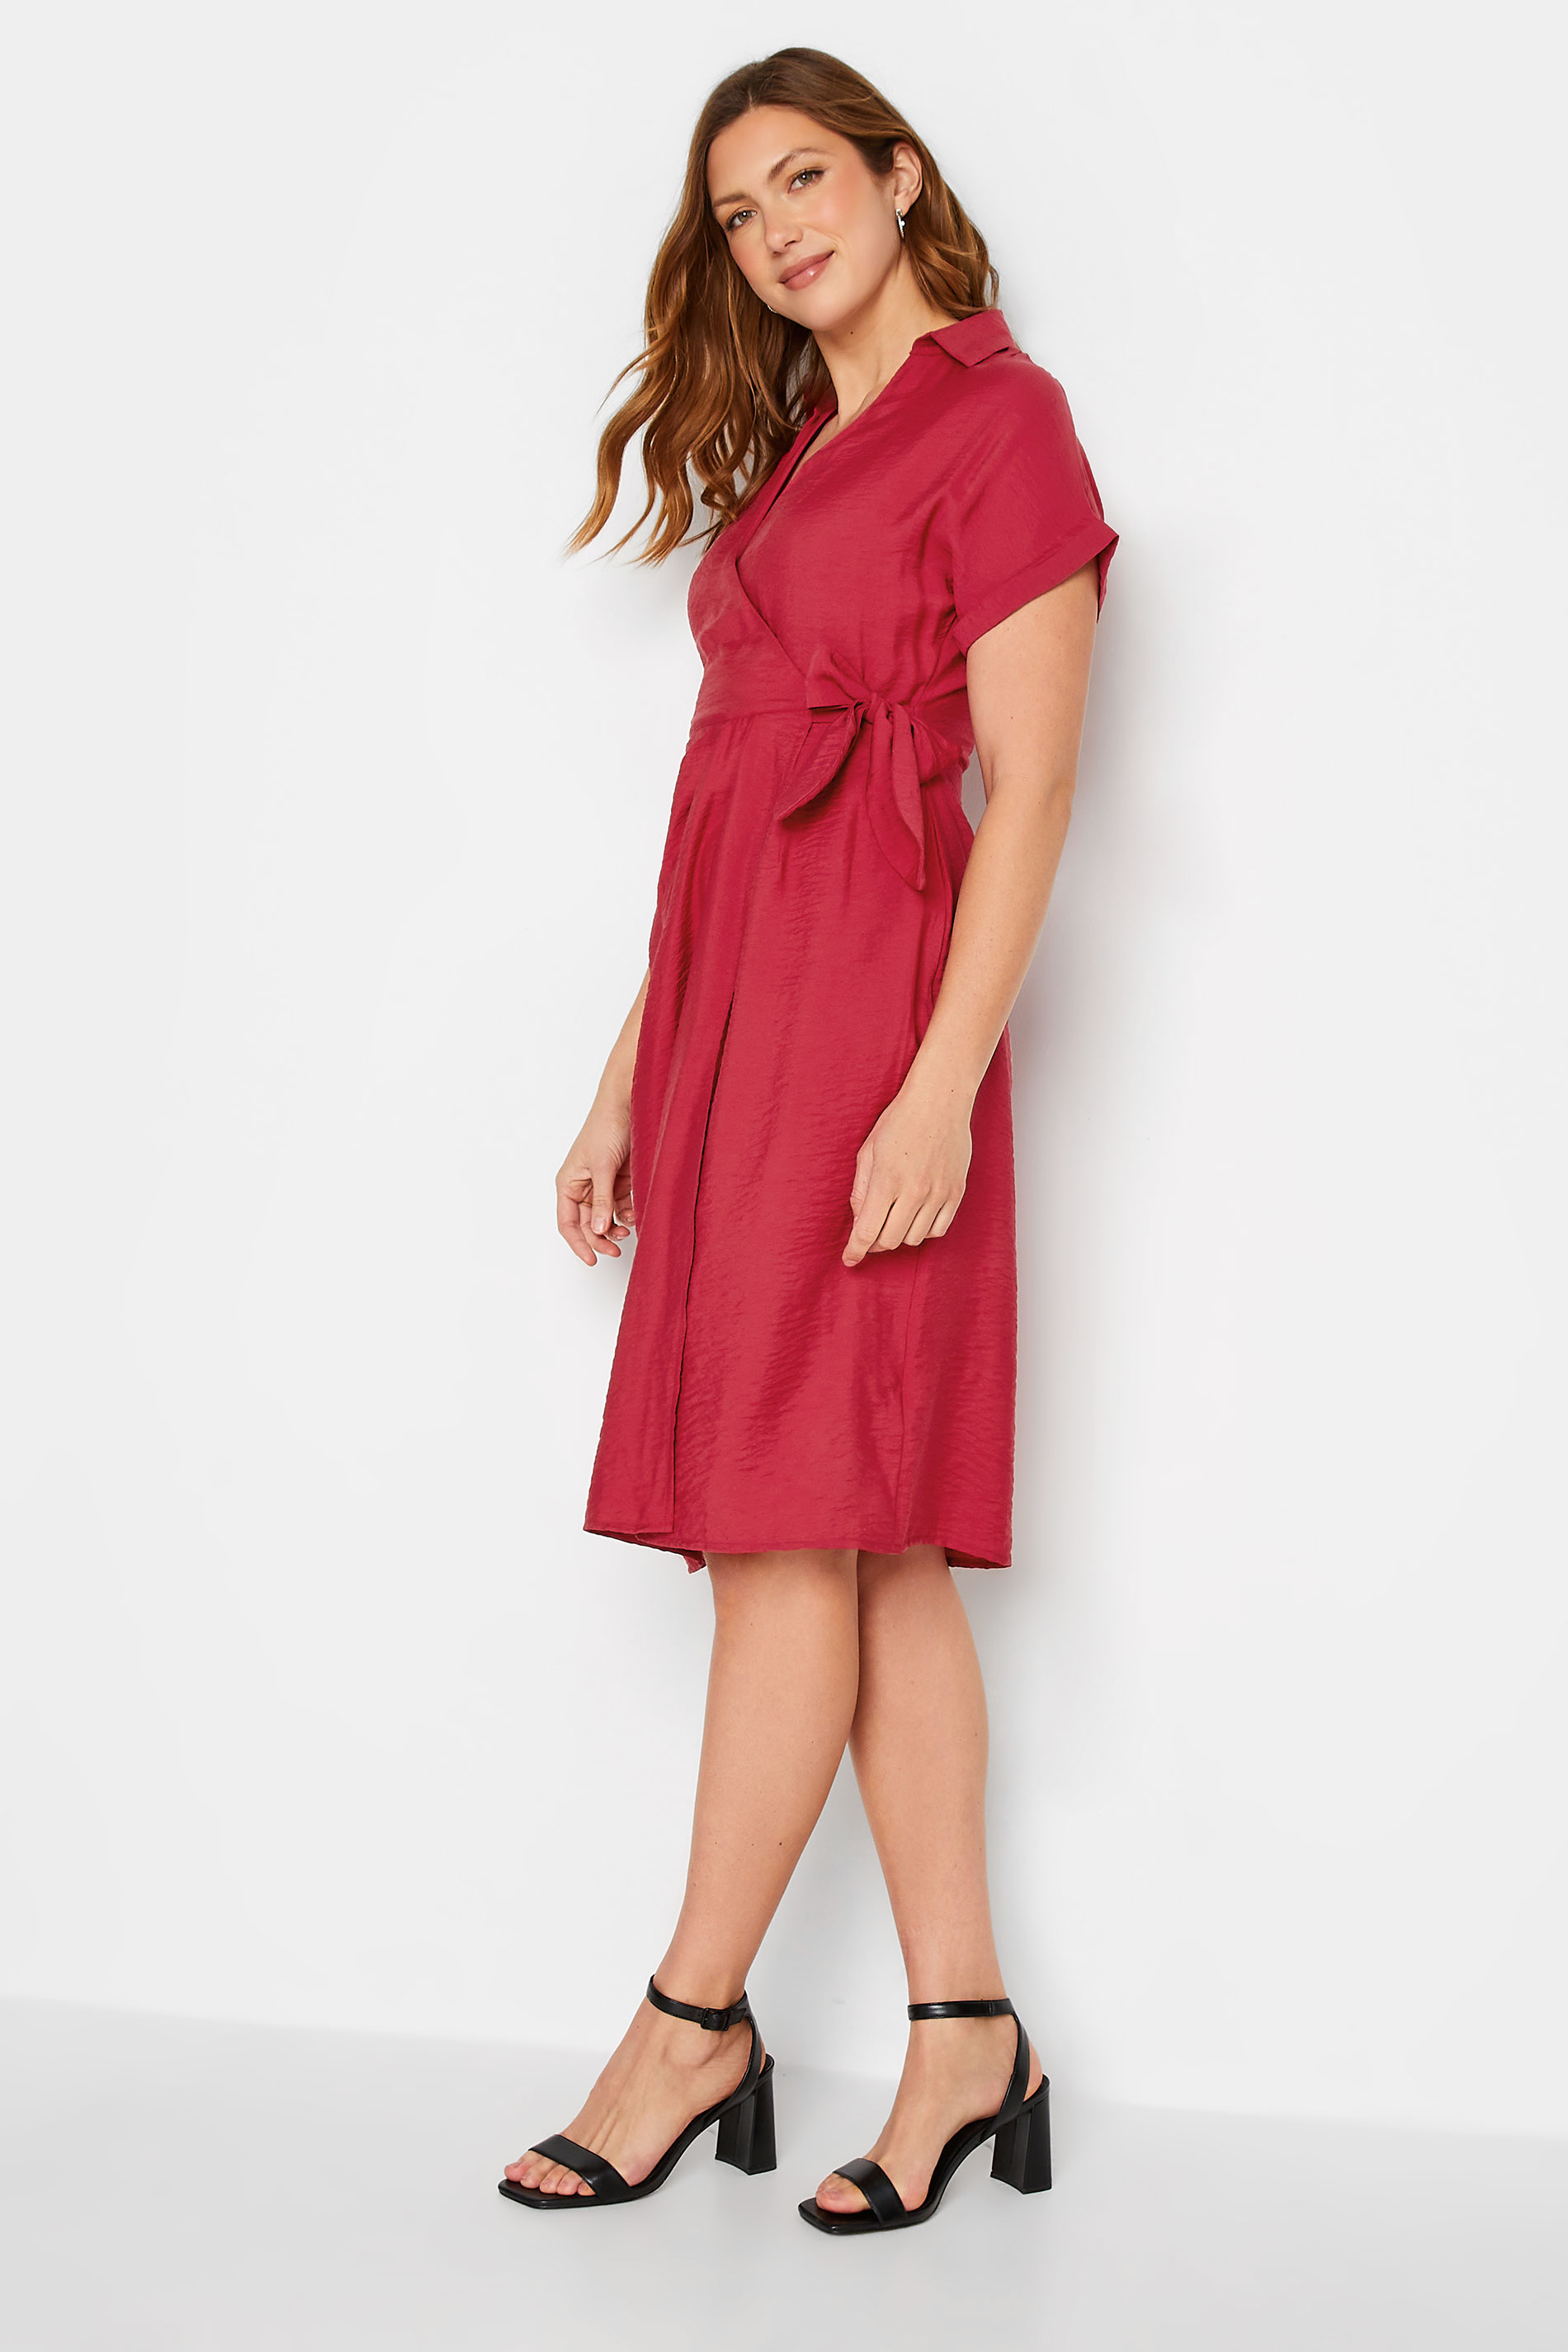 LTS Tall Women's Red Wrap Front Dress | Long Tall Sally 1